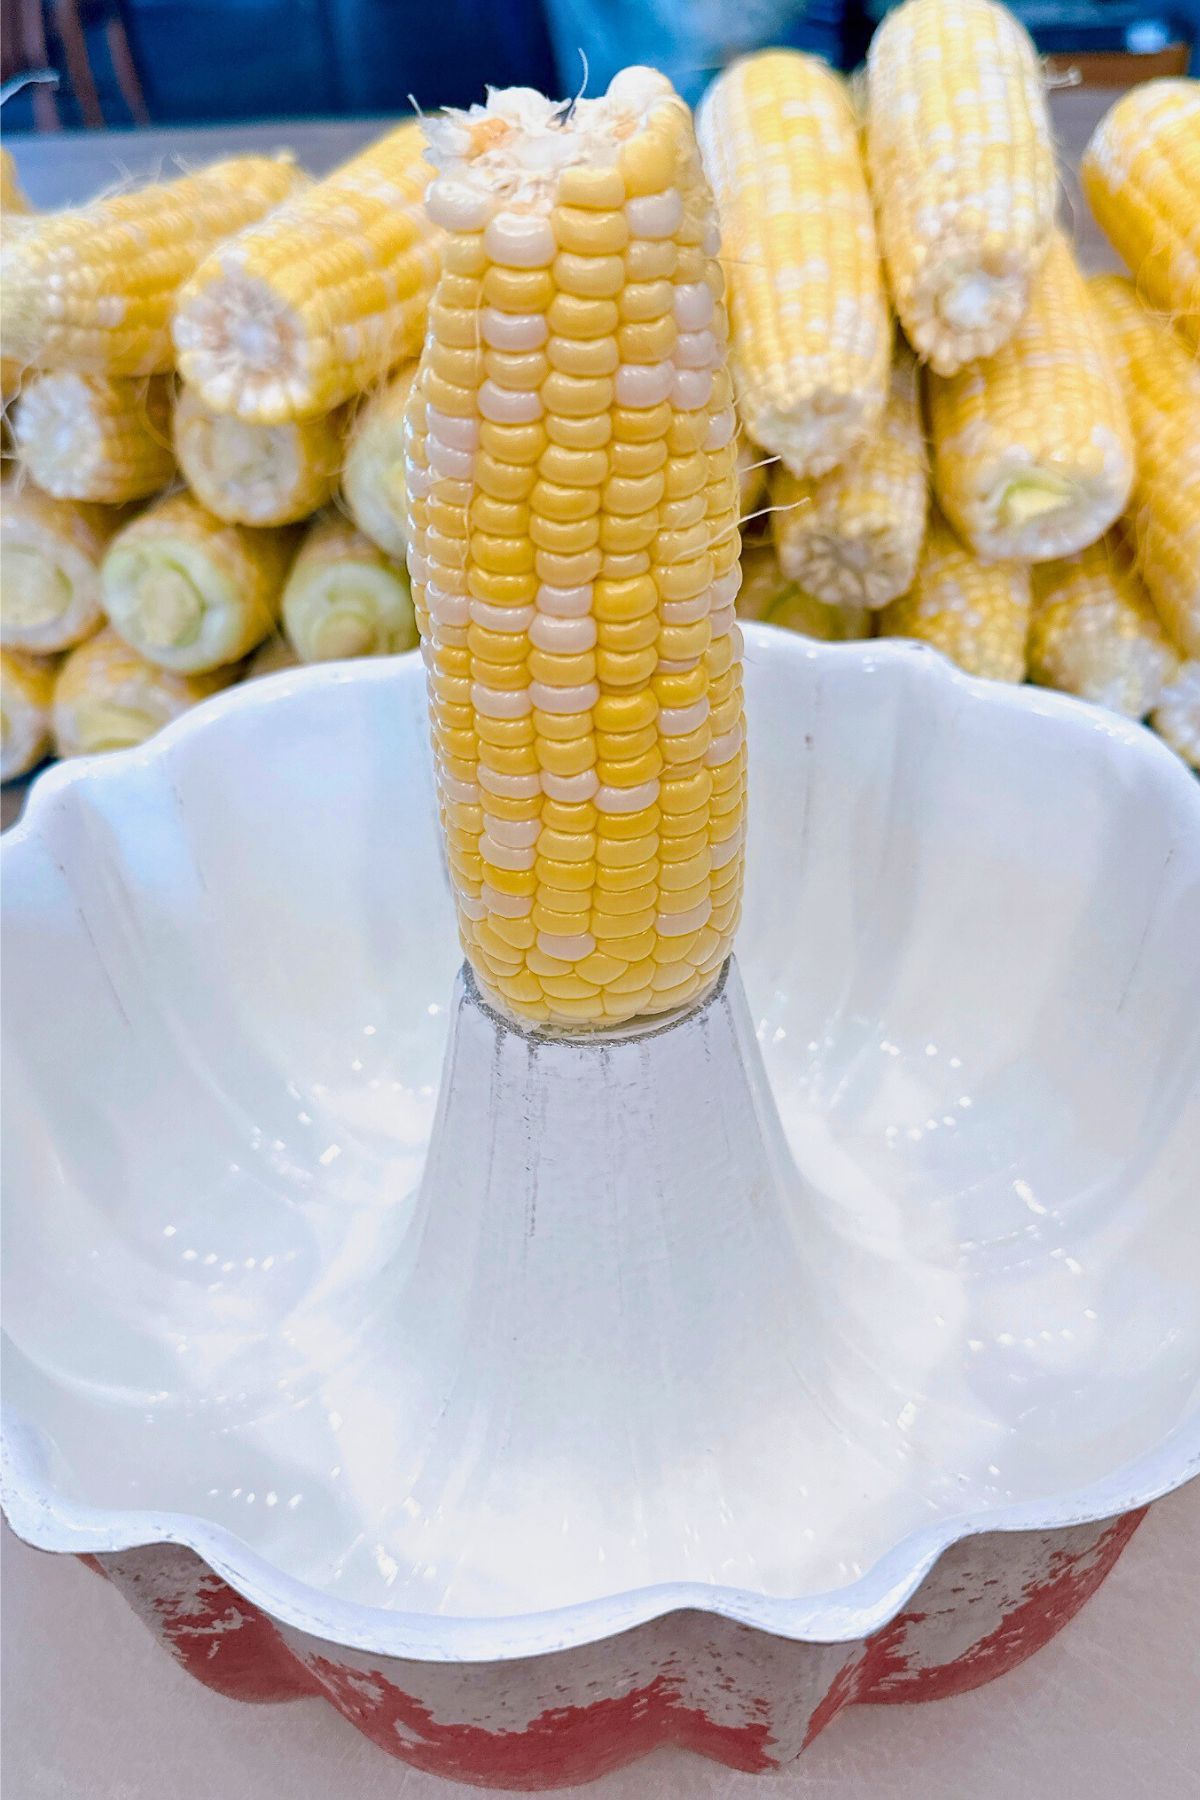 Cutting off corn into bundt pan for Corn Dip.